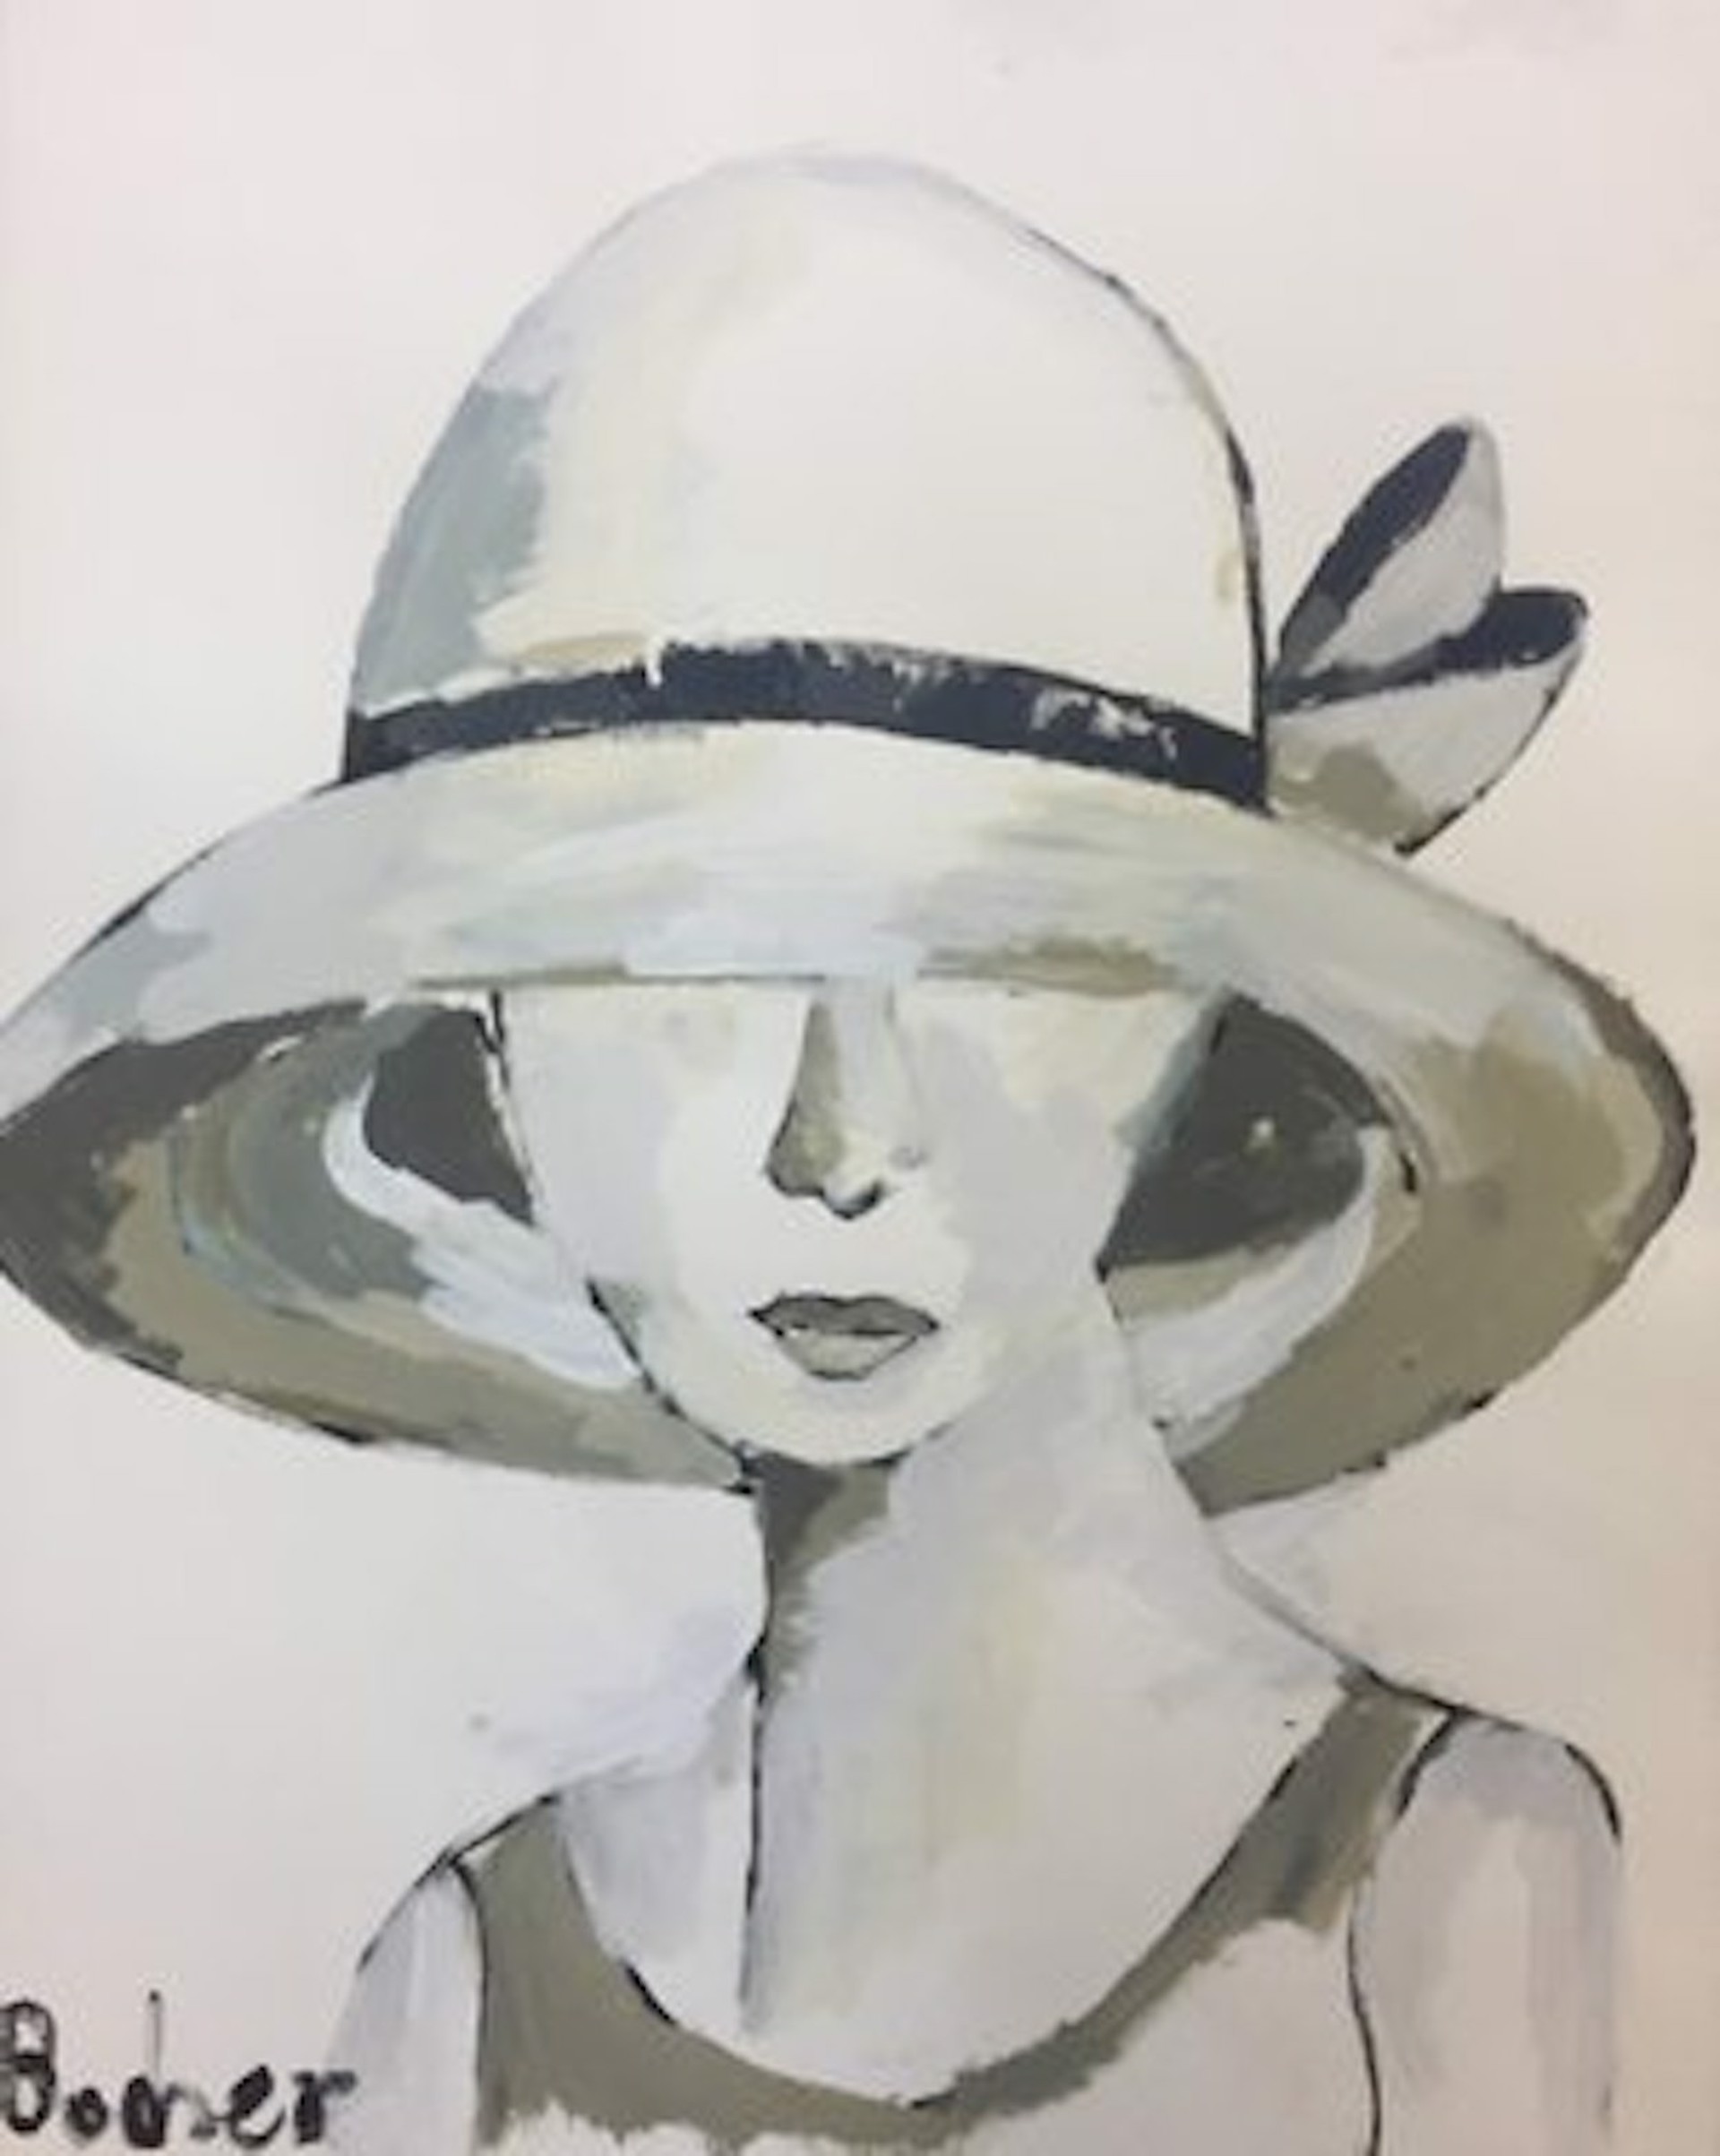 Sun Hat Style by Gary Bodner